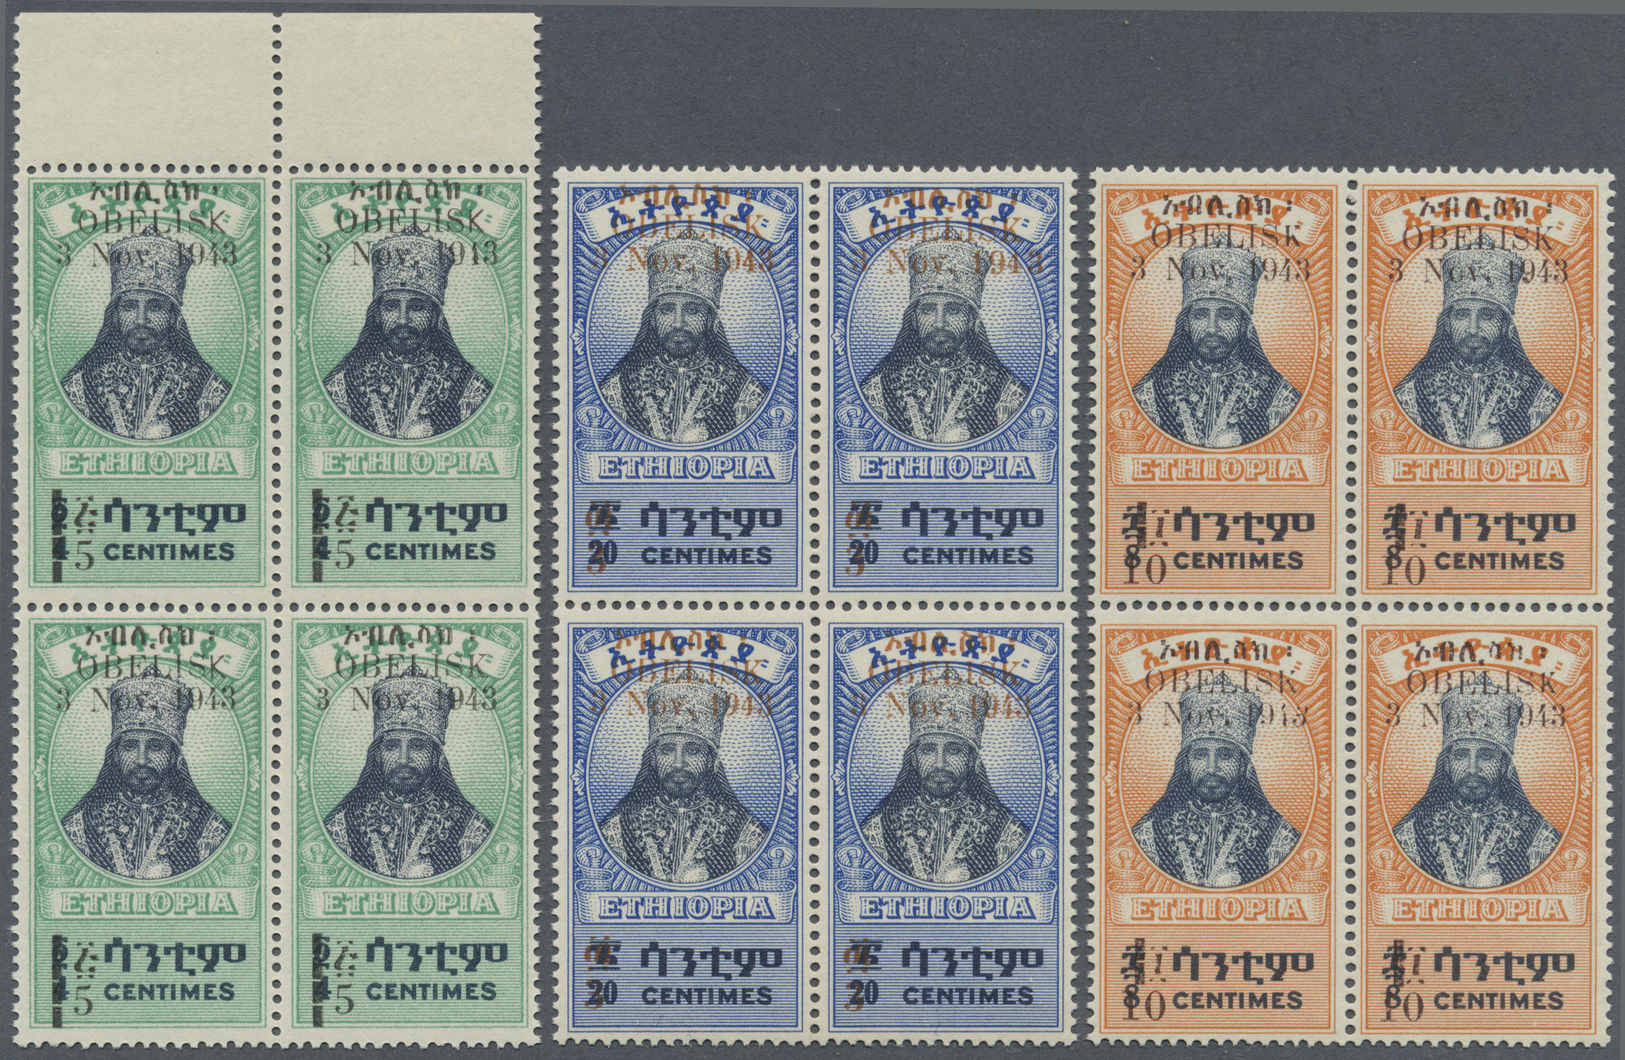 ** Äthiopien: 1943, "OBELISK 3 Nov. 1943" Overprinted Block Of Four Set Of Five Values, All Mint Never Hinged, Very Fine - Ethiopia